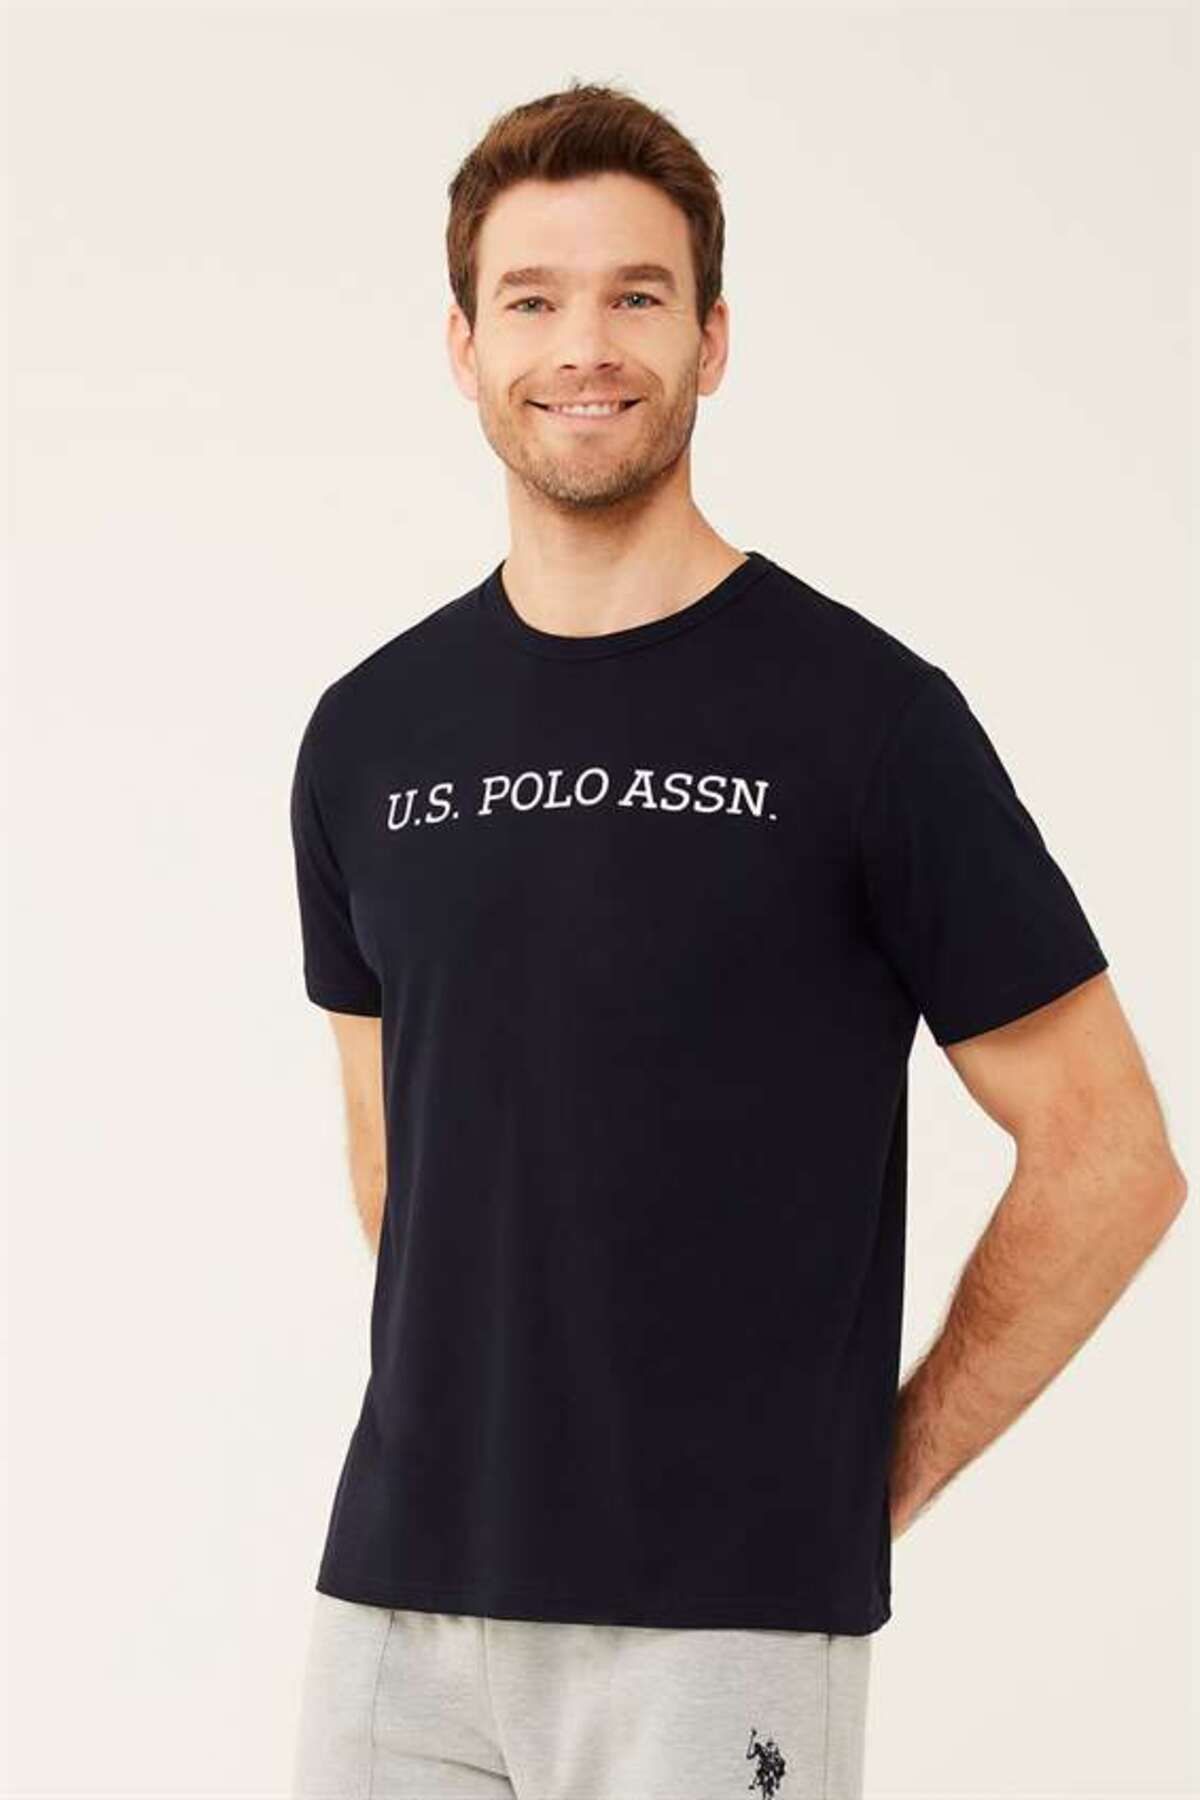 U.S. Polo Assn. تیشرت مردانه یقه گرد مشکی